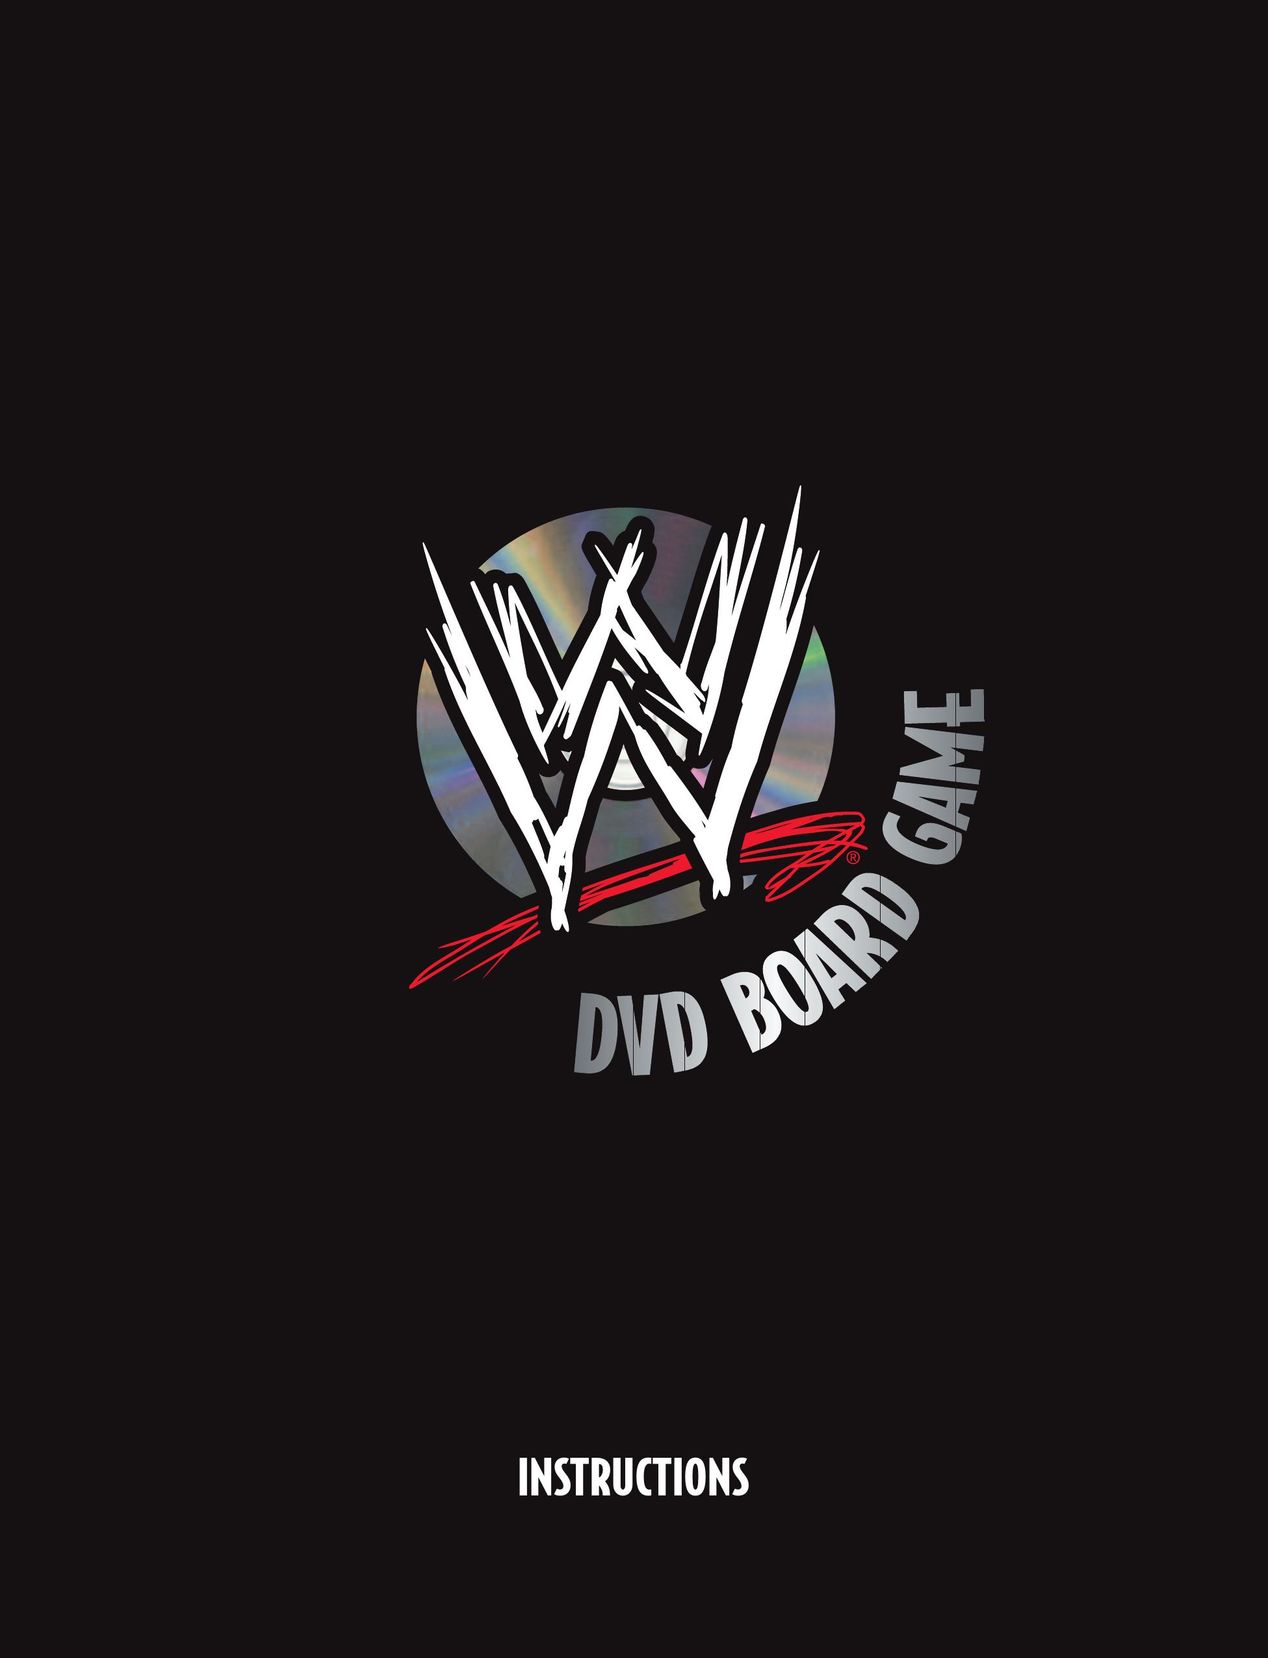 TAG Wrestling DVD Board Game Games User Manual